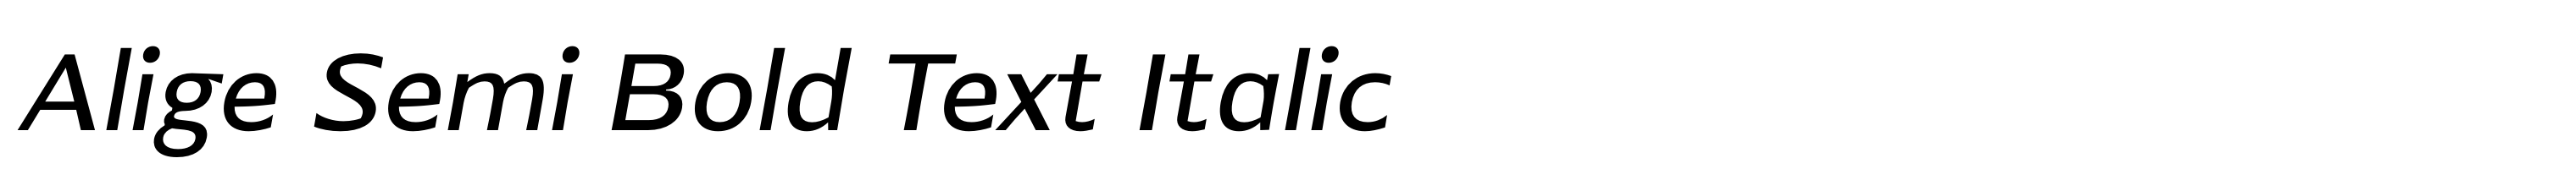 Alige Semi Bold Text Italic